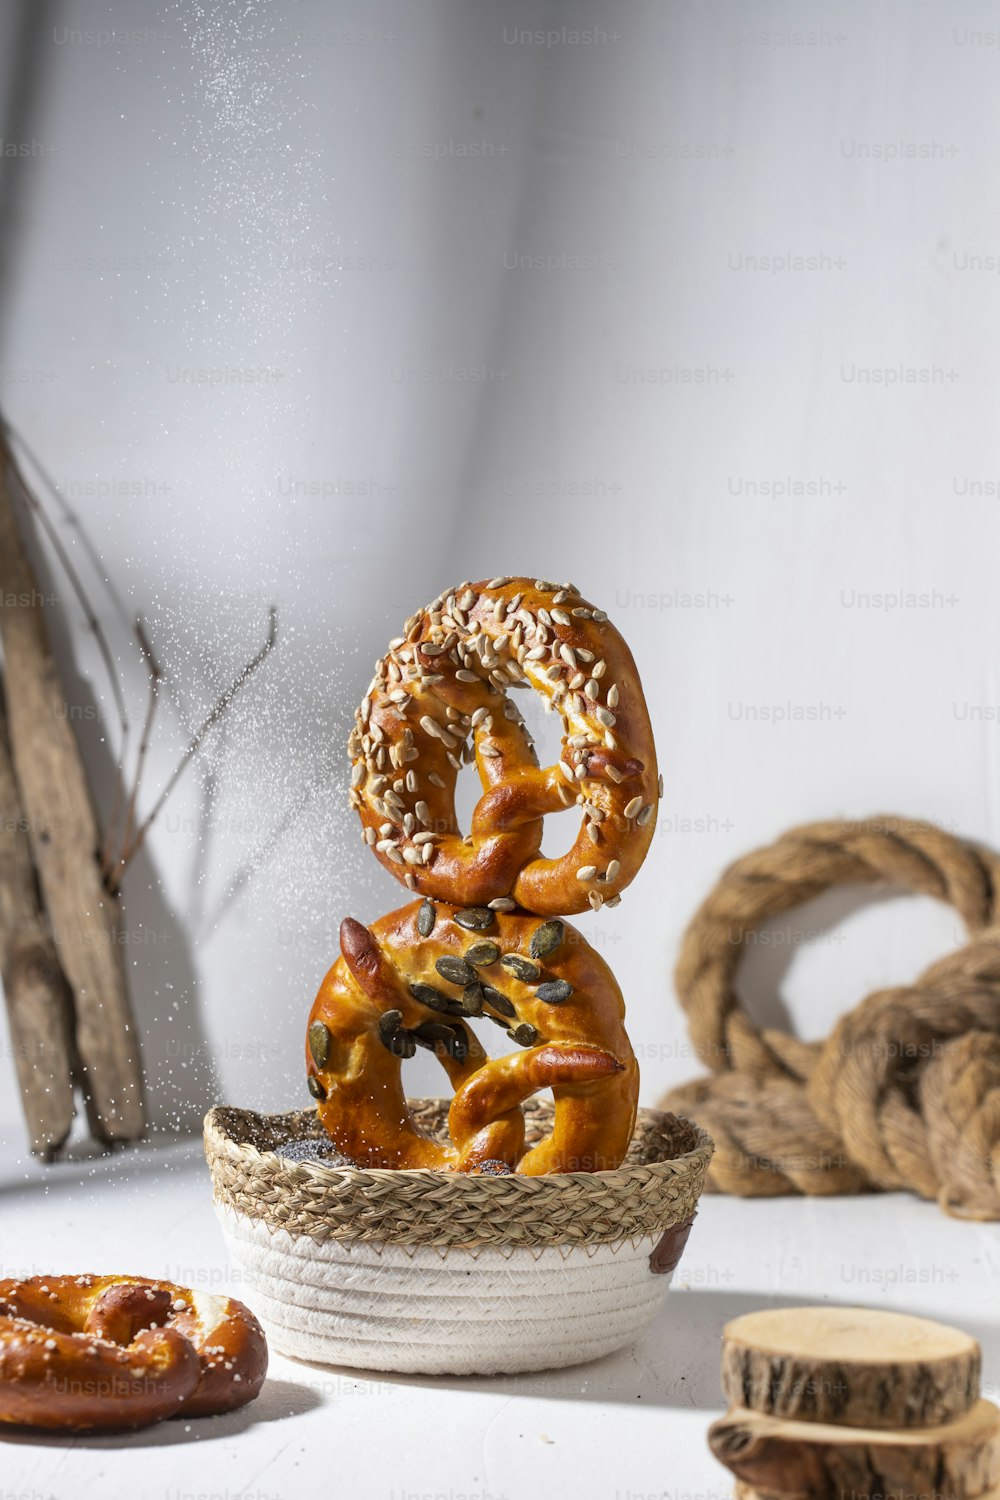 Un grupo de pretzels sentados encima de una canasta